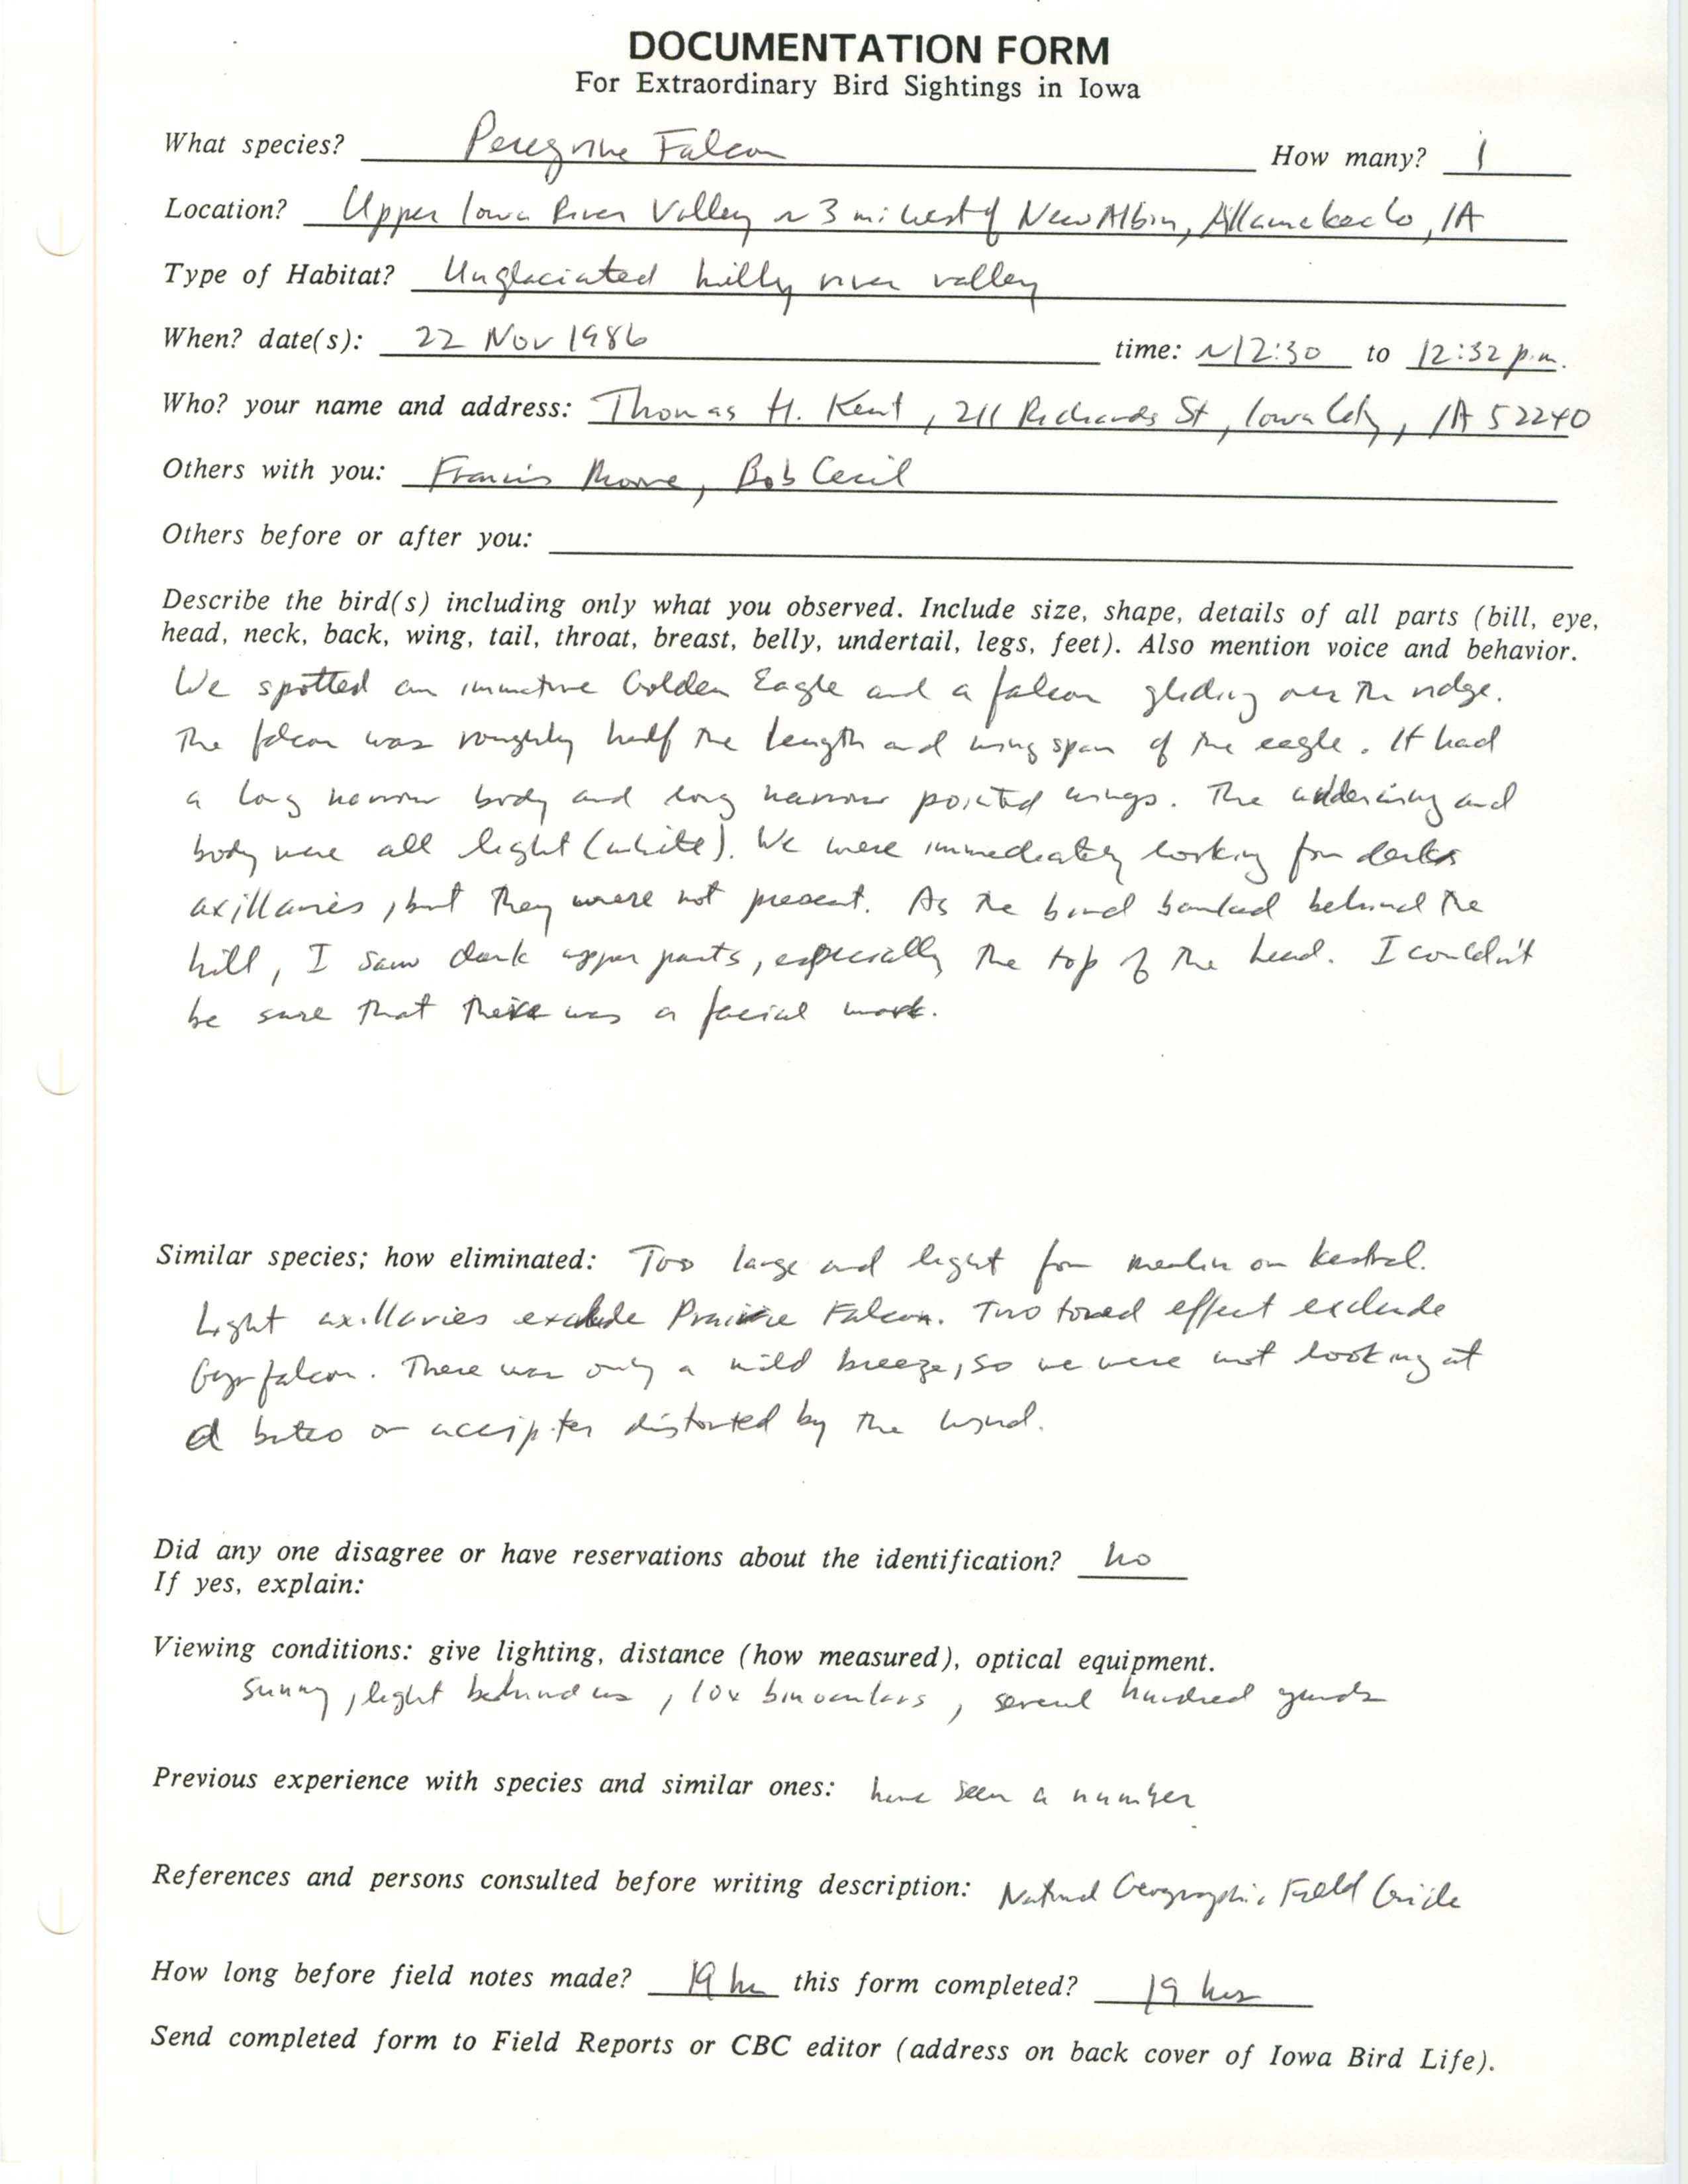 Rare bird documentation form for Peregrine Falcon west of New Albin, 1986